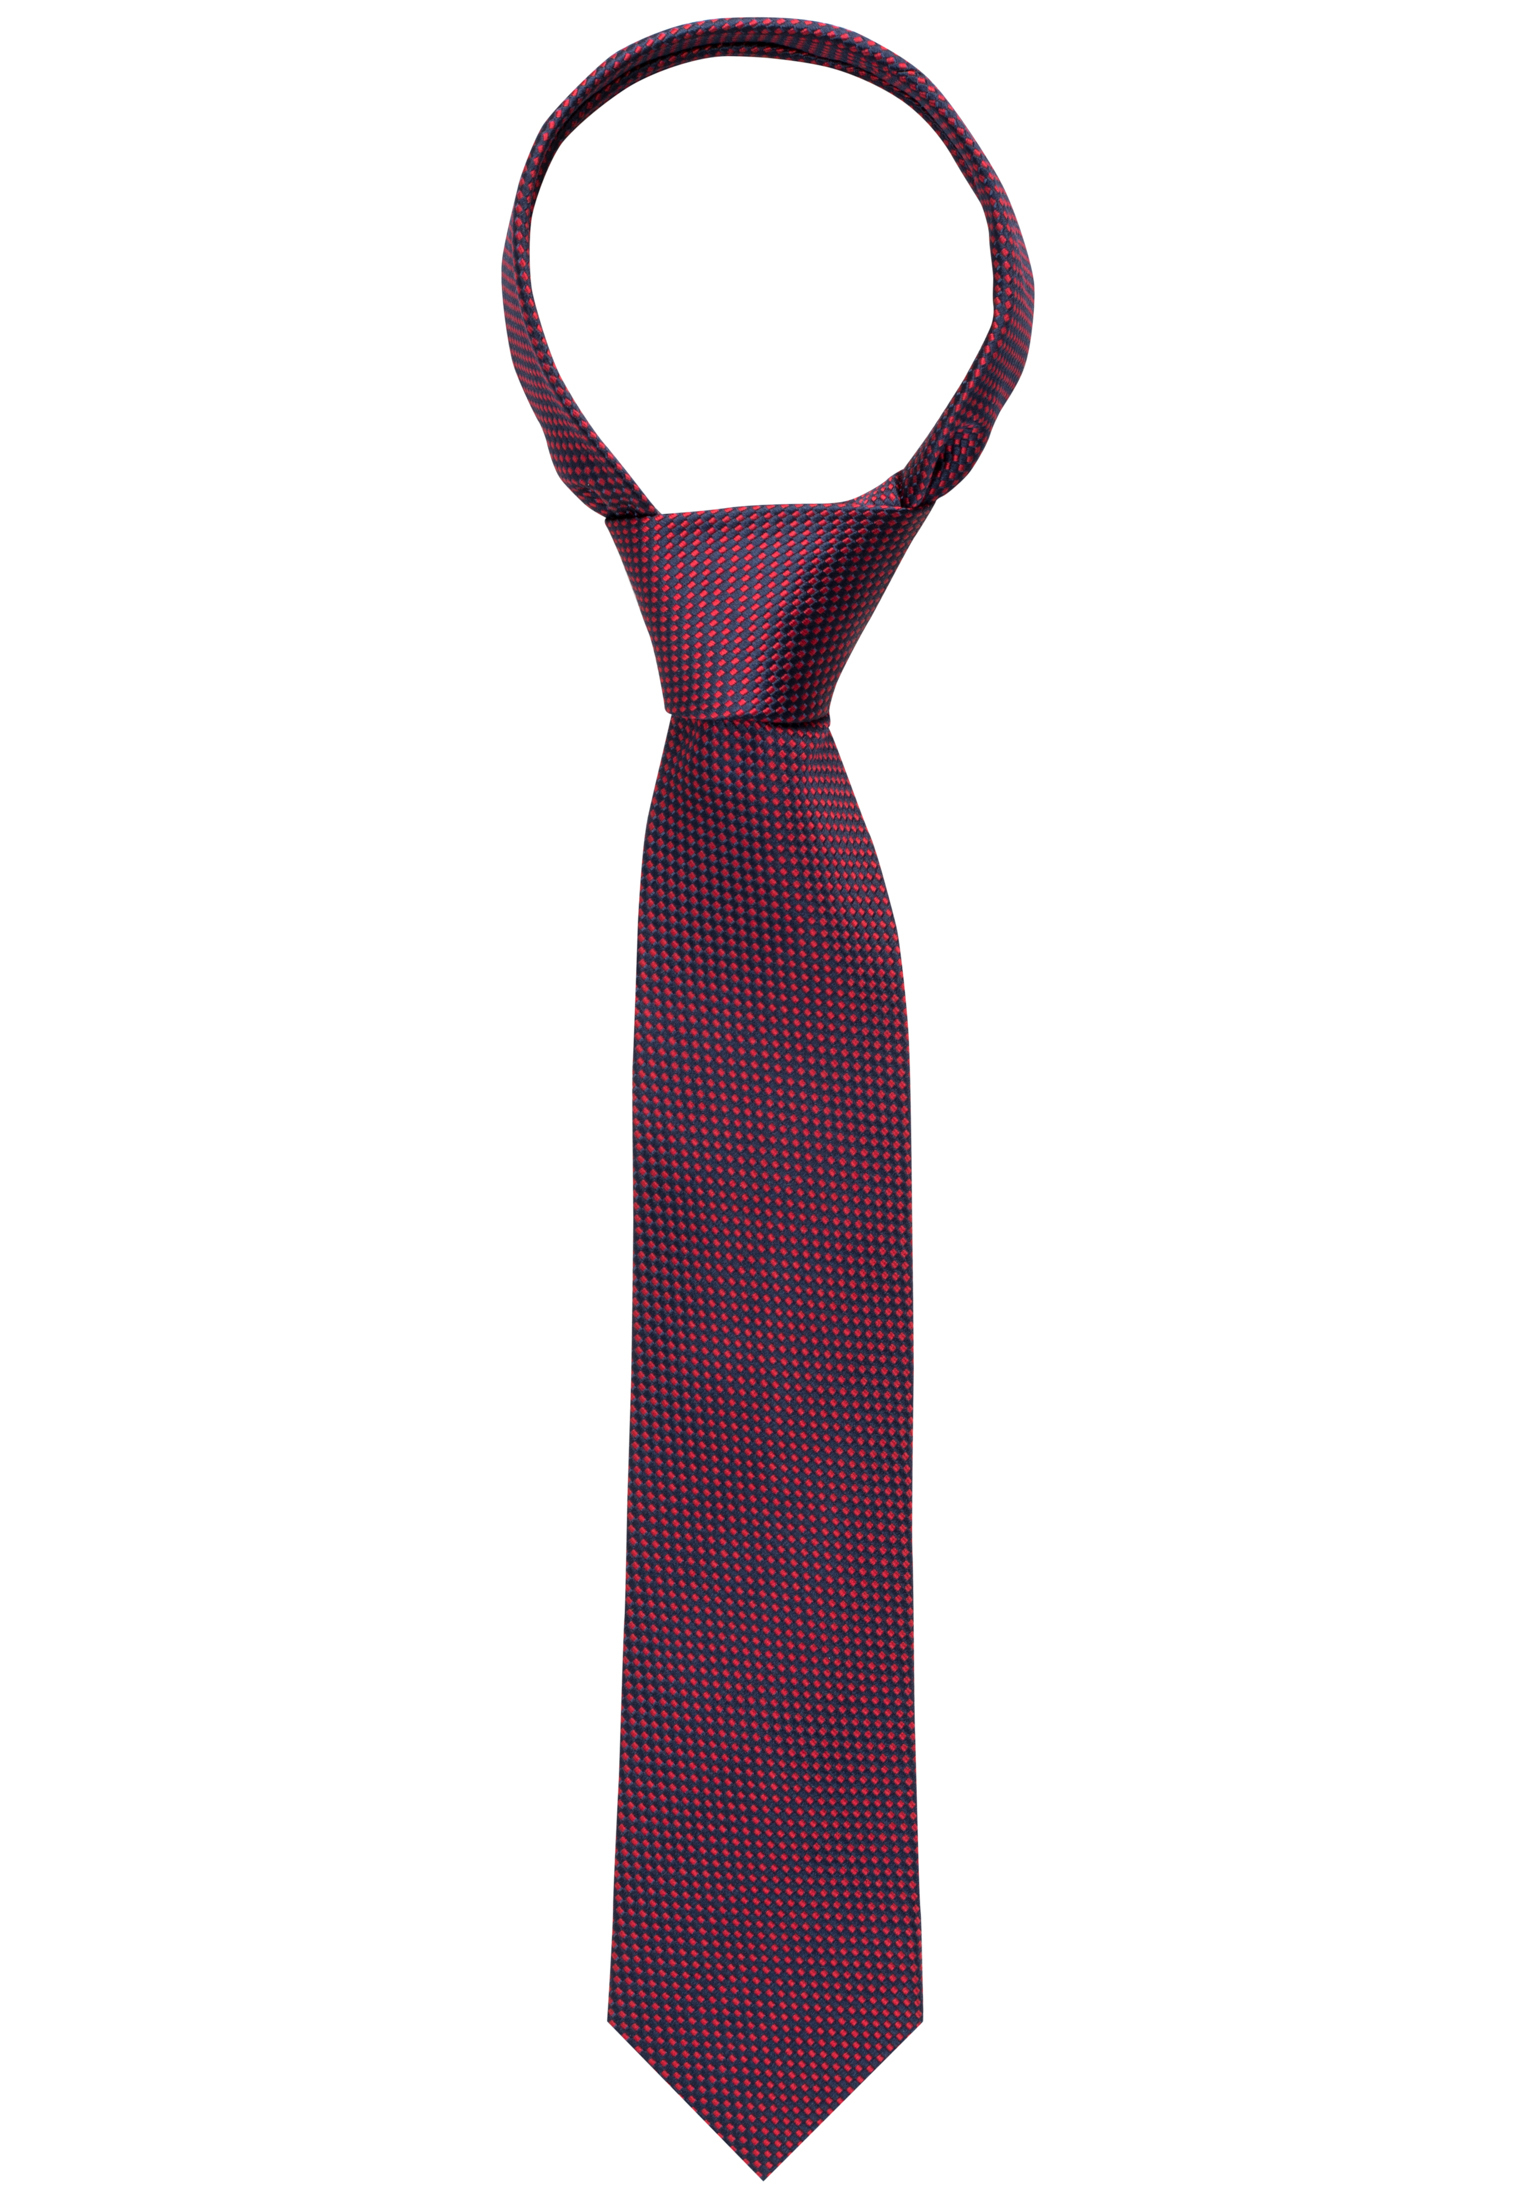 Krawatte in navy/rot strukturiert navy/rot 142 1AC00534-81-89-142 | | 